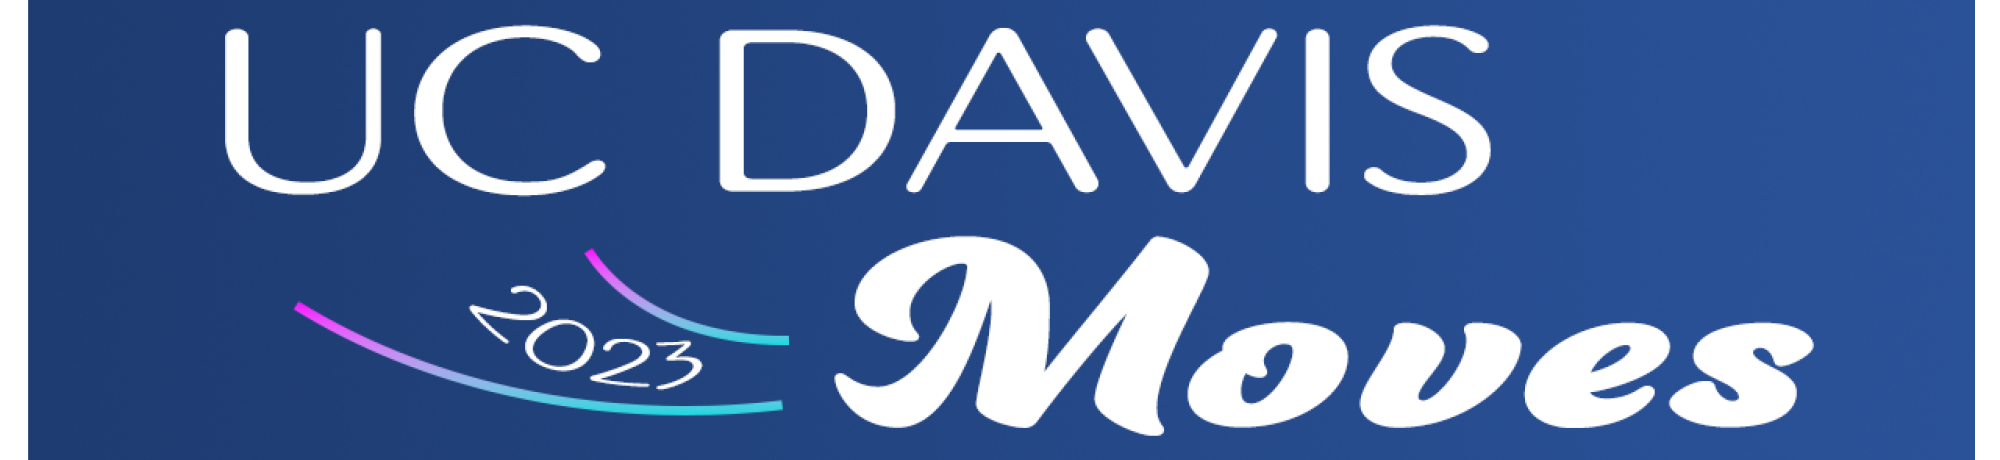 UC Davis Moves 2023 Logo cropped